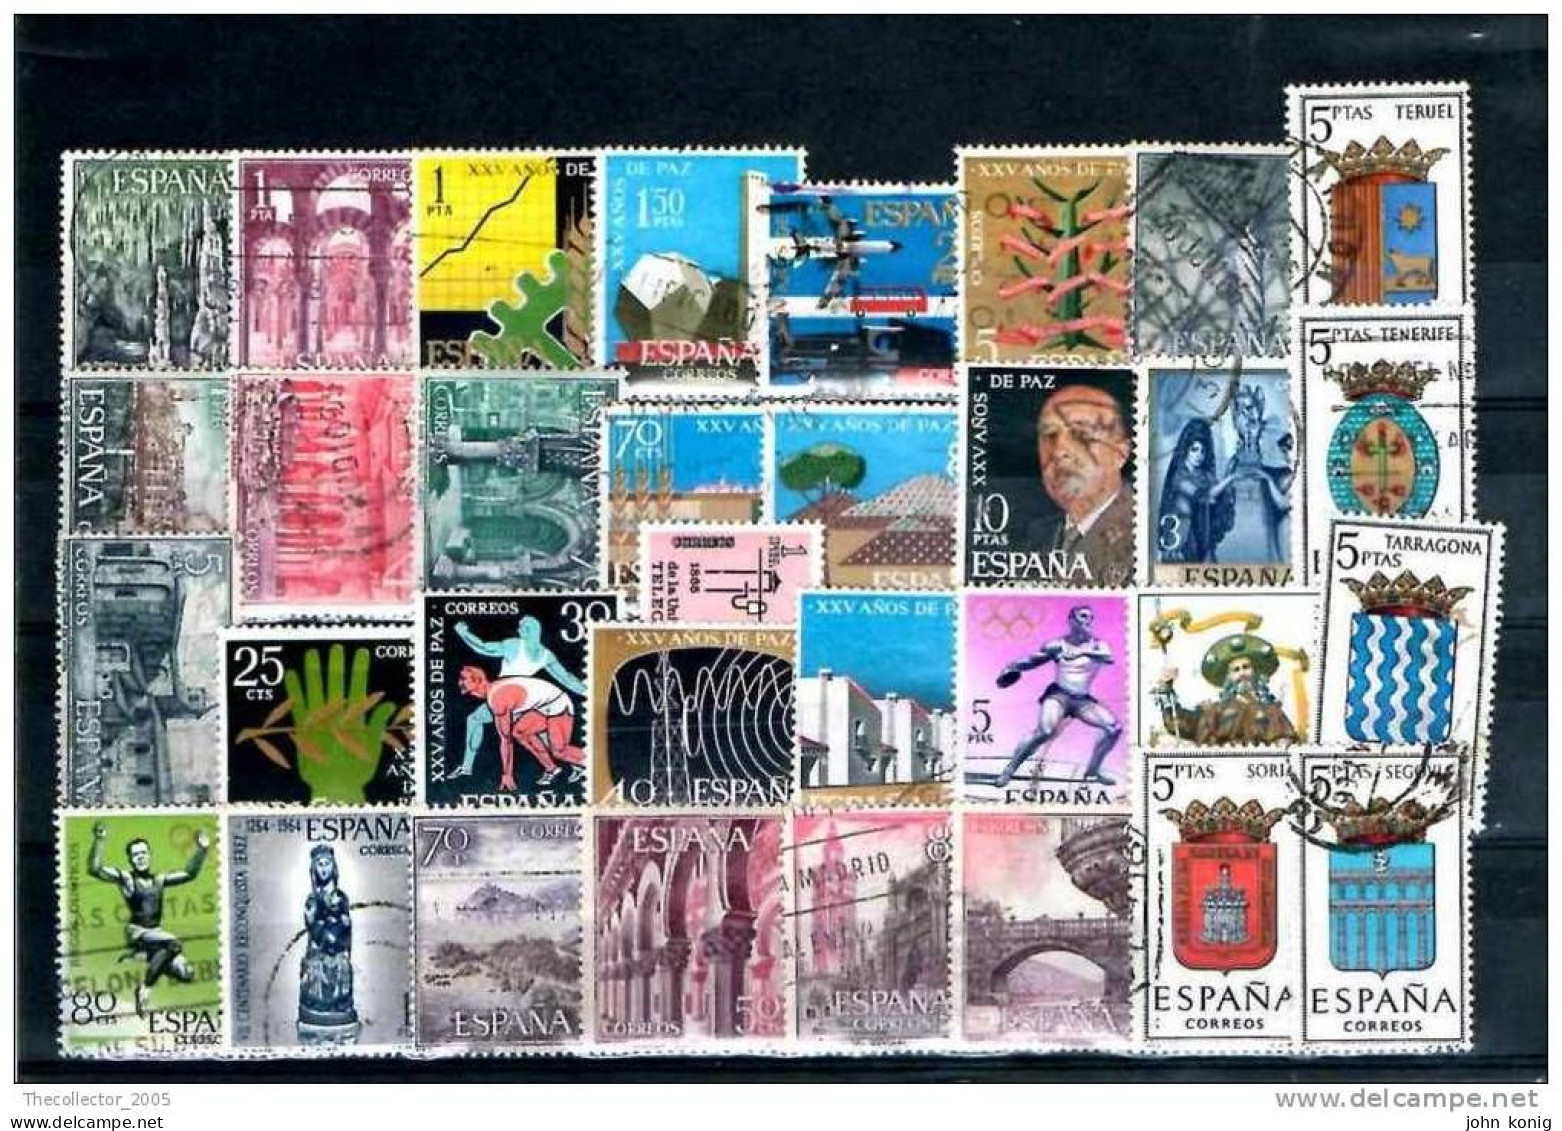 Spagna - Spain - Espana - Lotto Francobolli - Stamps Lot - Colecciones